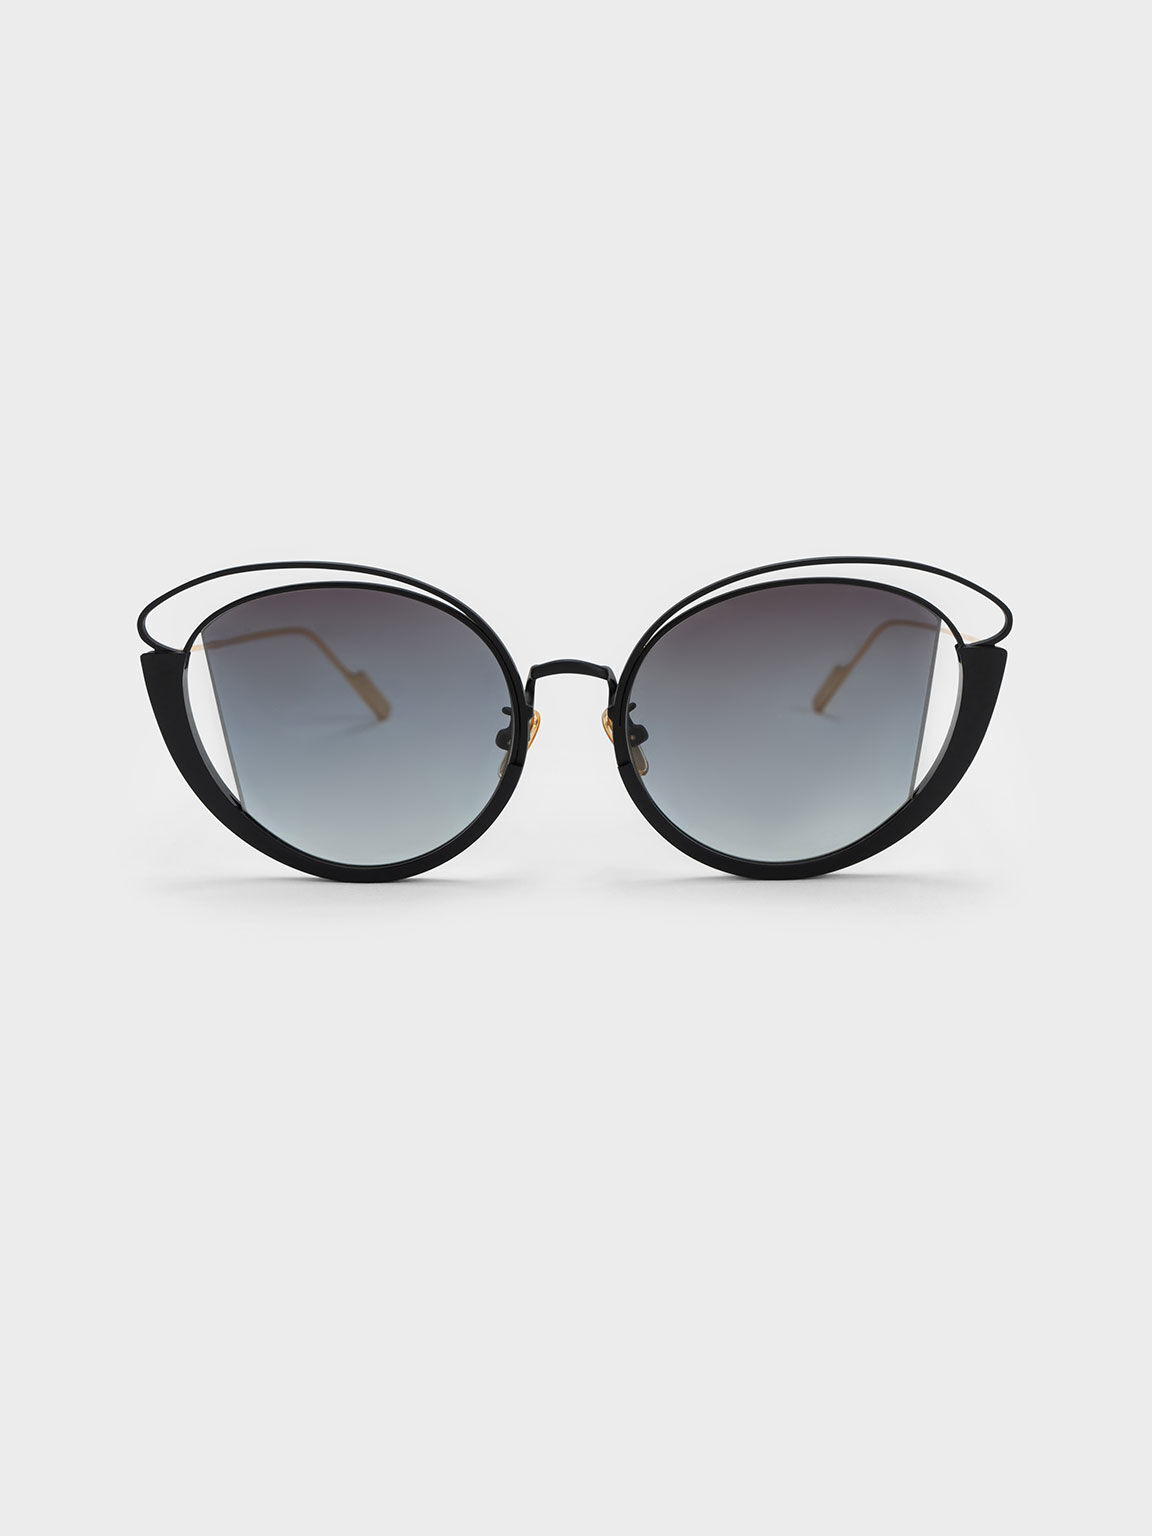 Kacamata Oval Wireframe Cut-Out, Black, hi-res